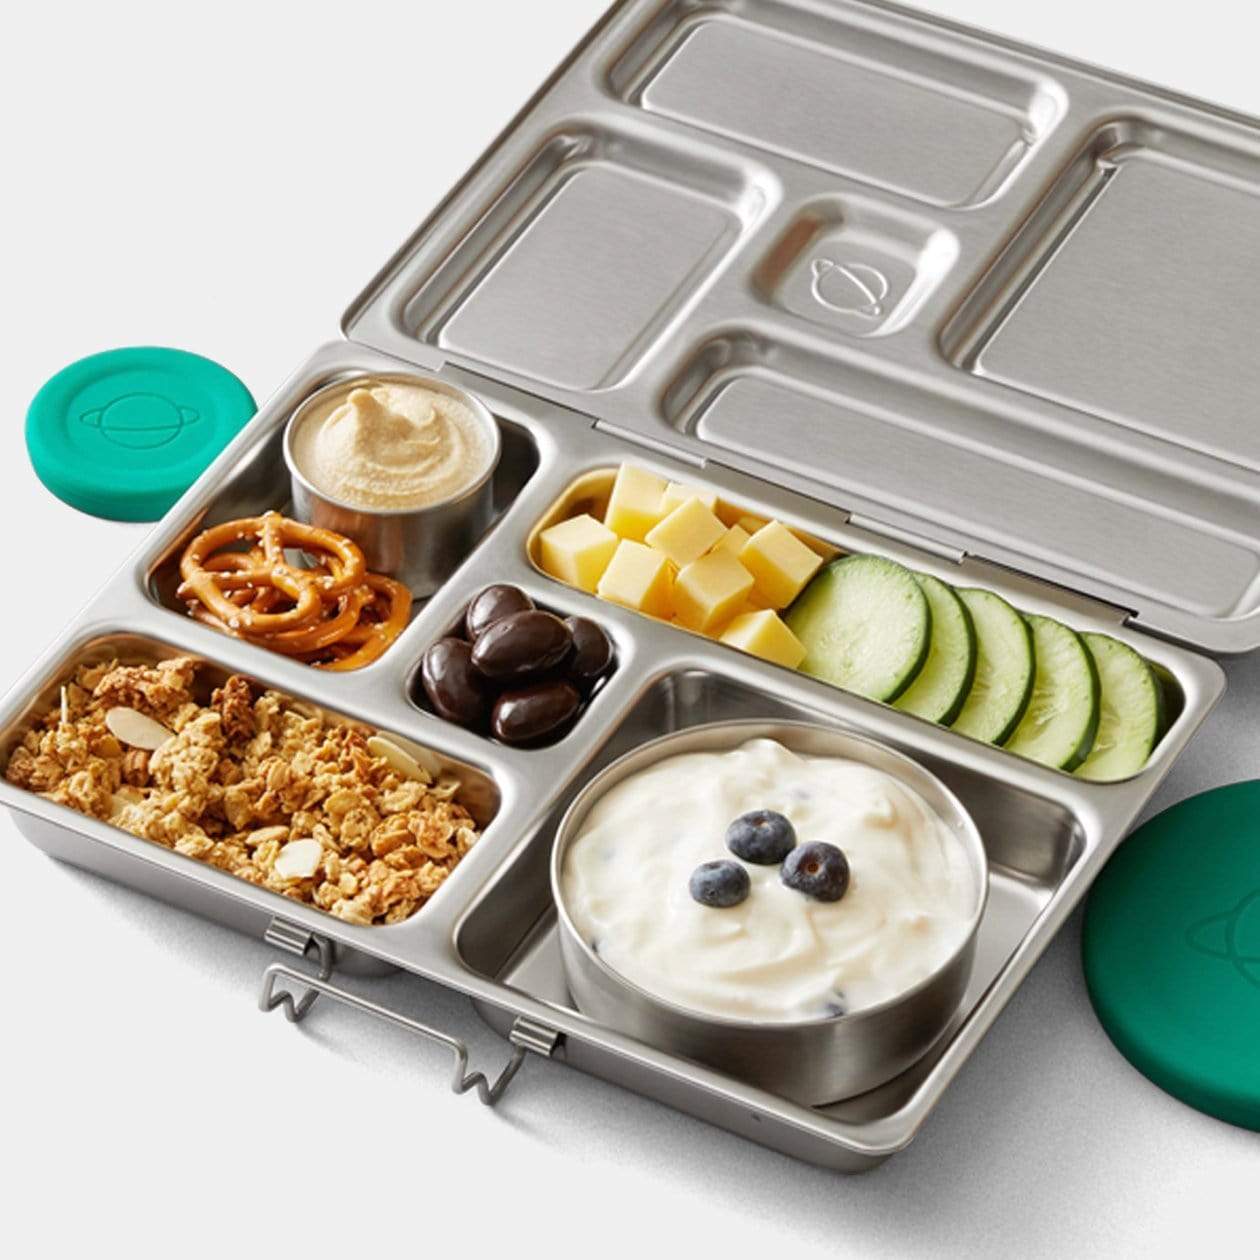 The Best Lunch Box Gear for kids - The Natural Nurturer